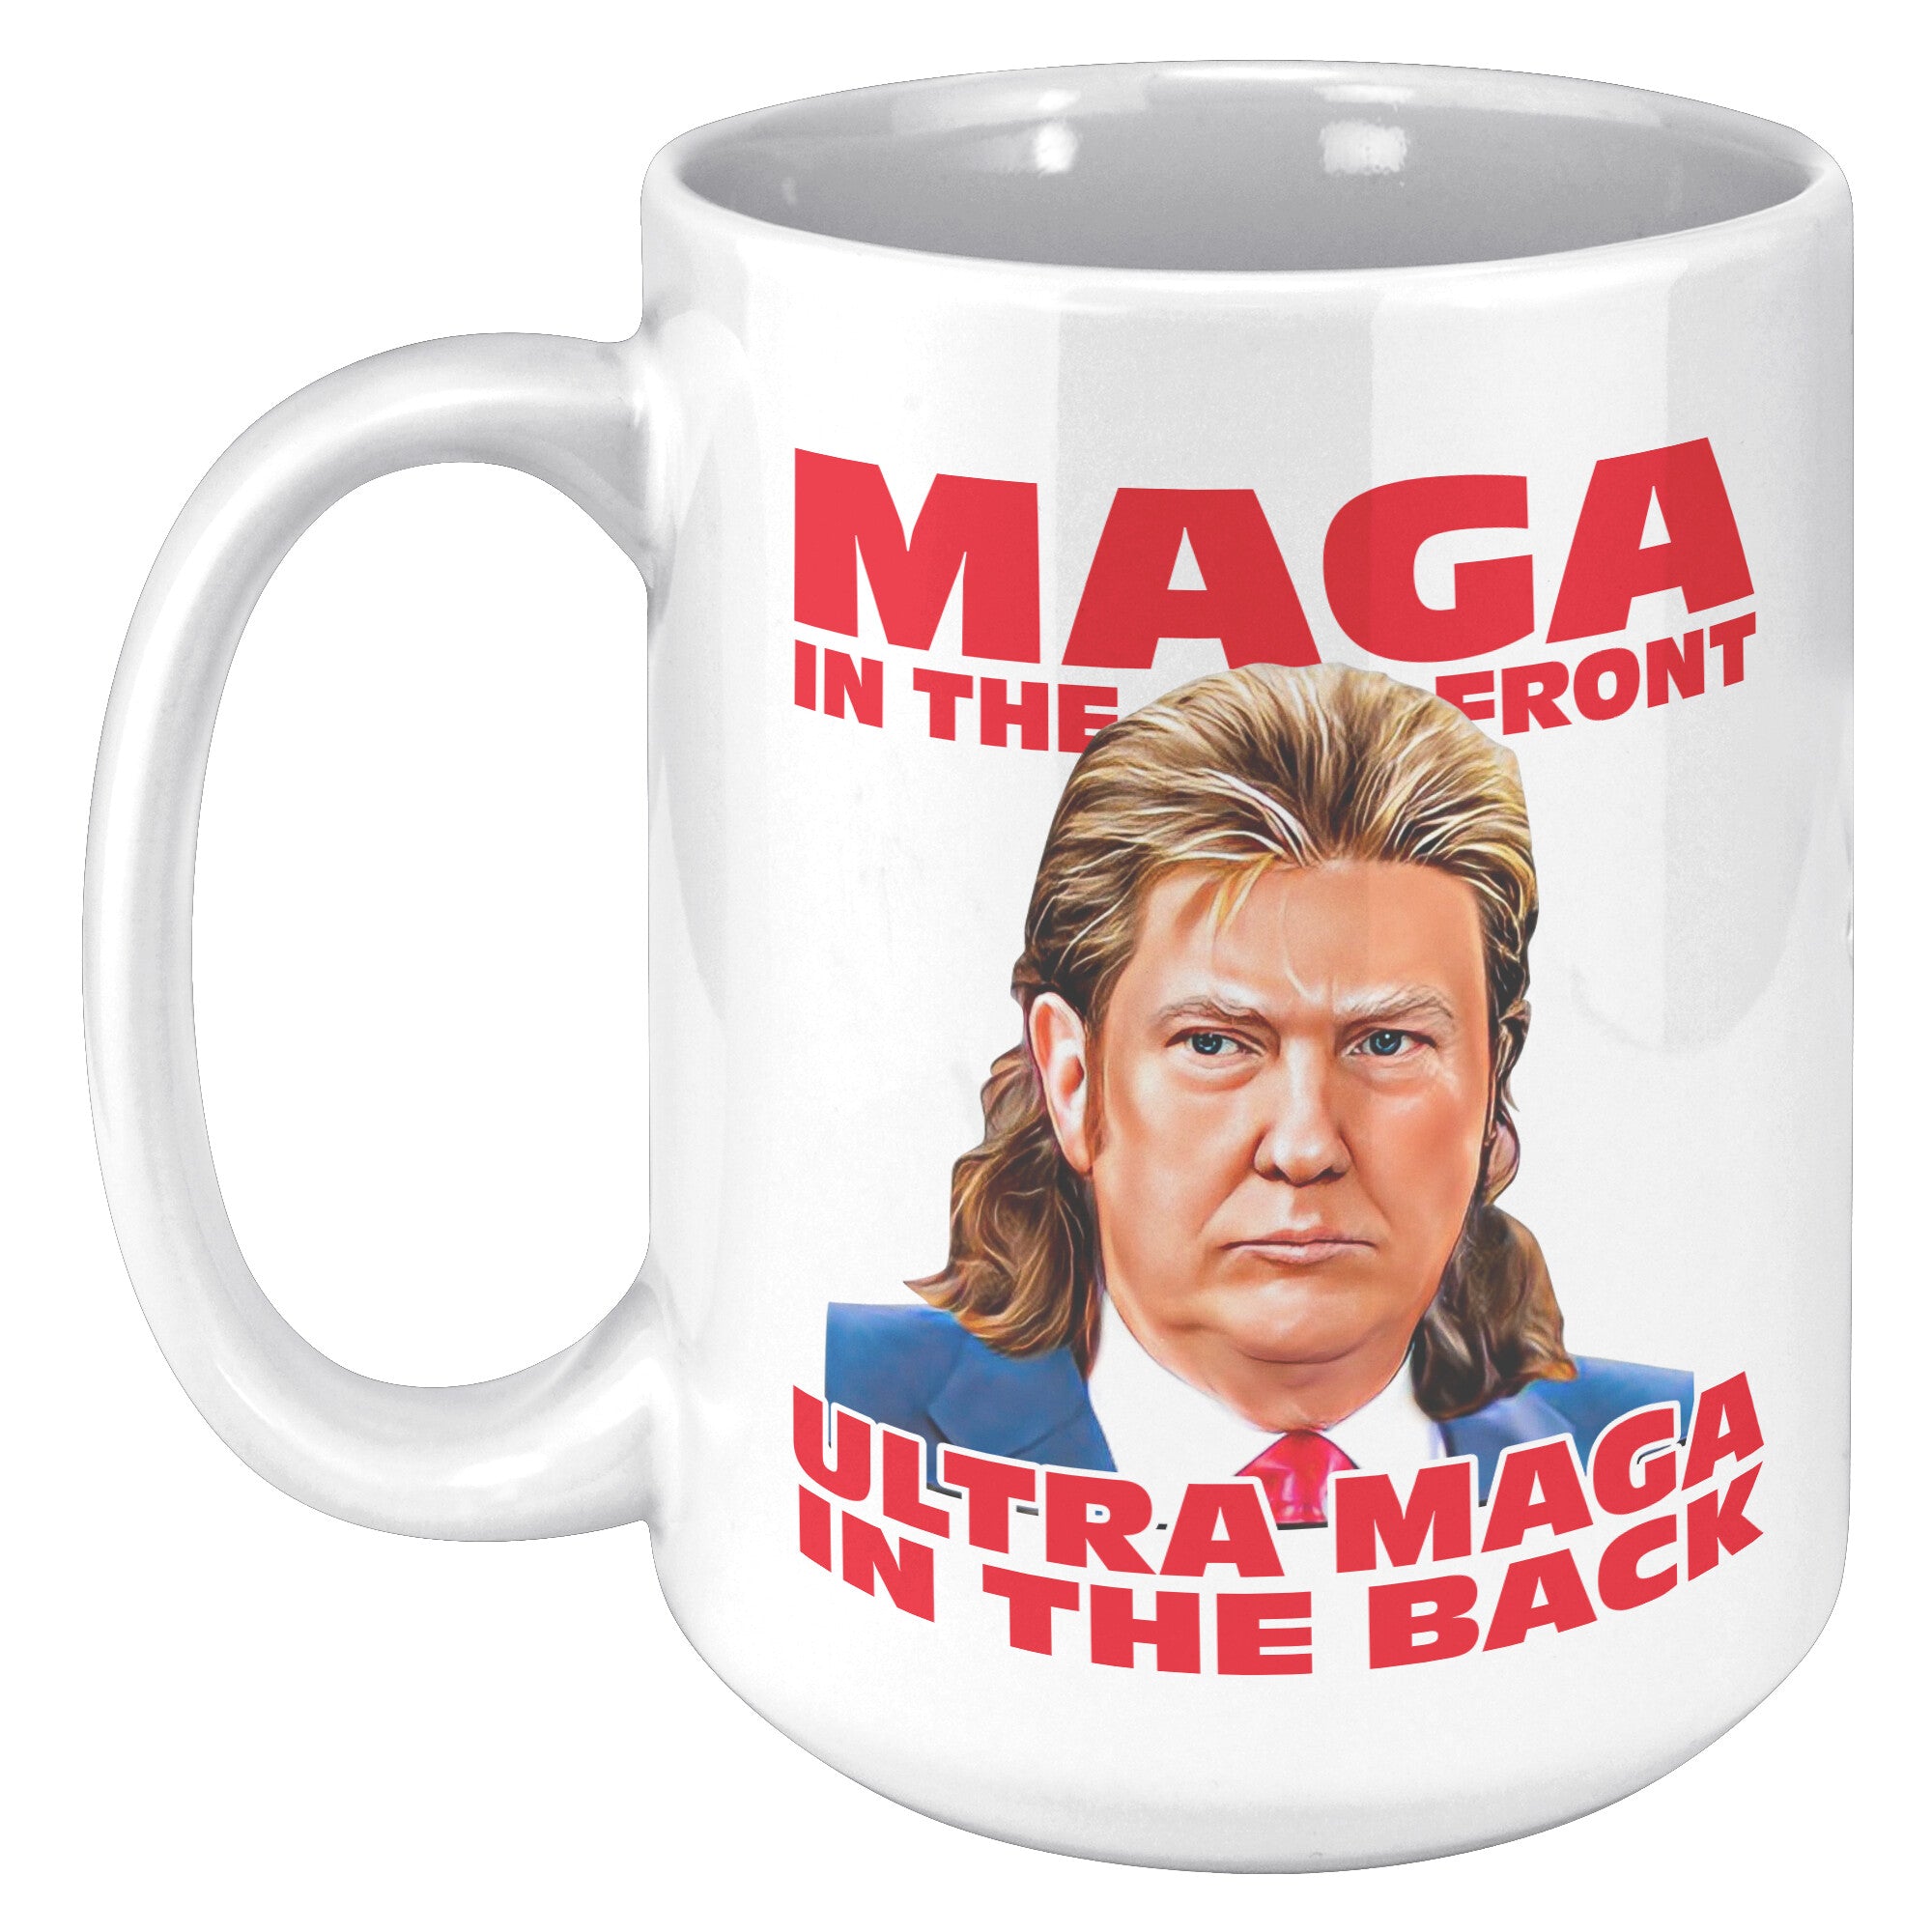 Maga In The Front Ultra Maga In The Back Coffee Mug -Ceramic Mugs | Drunk America 